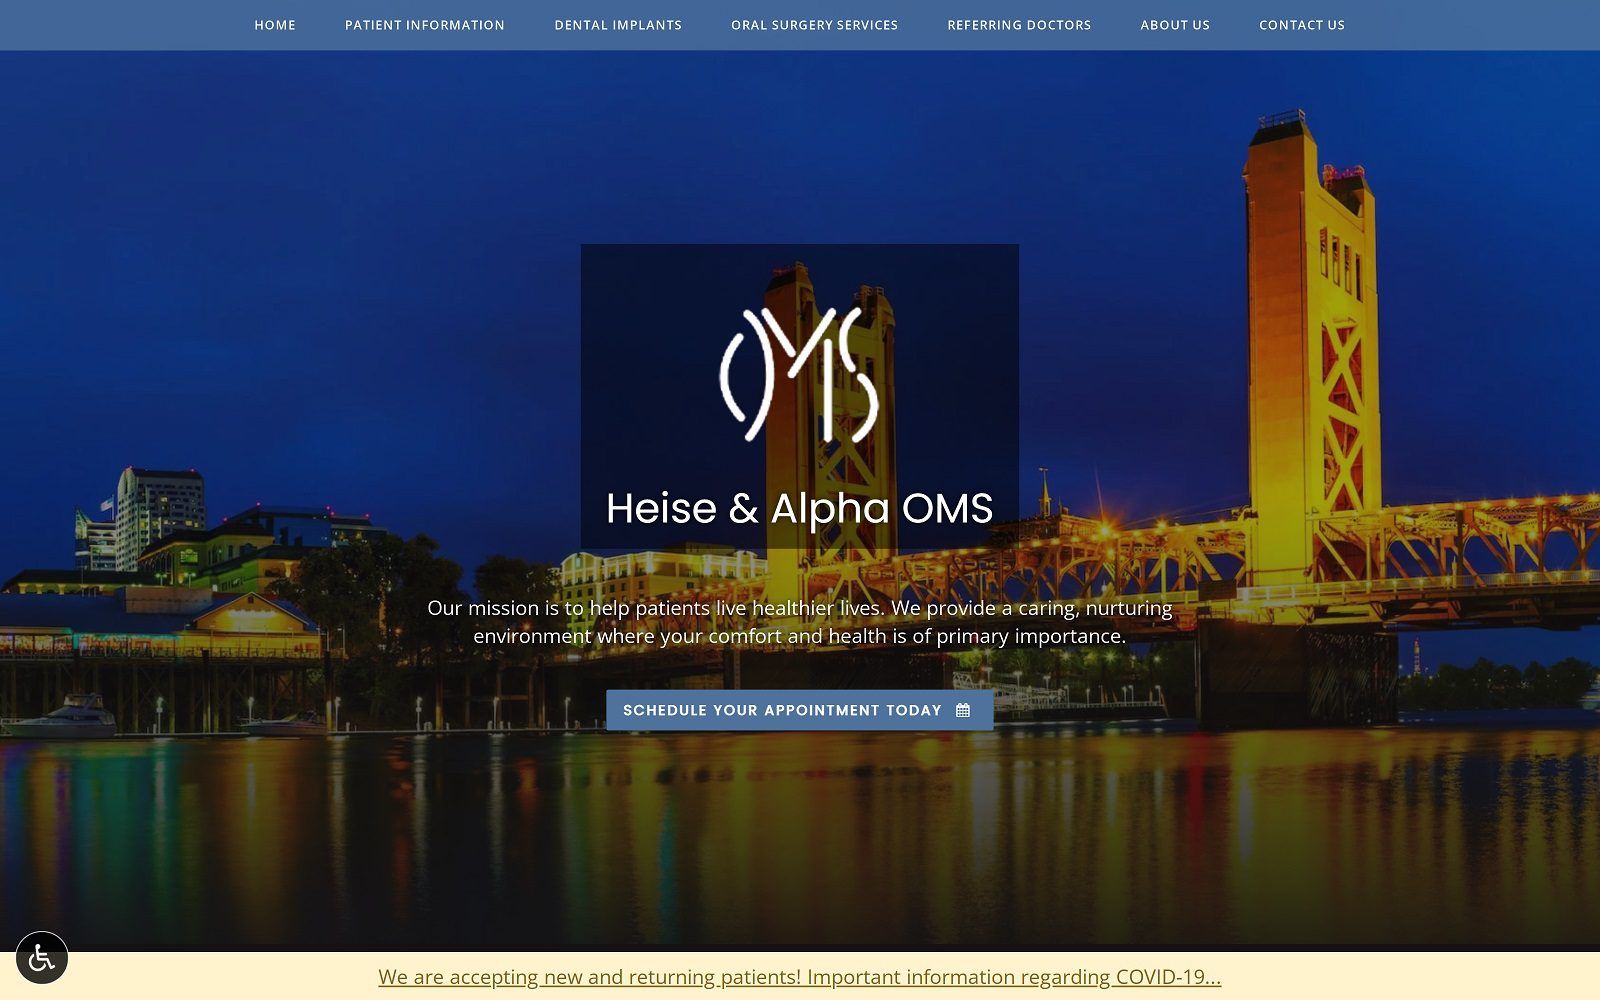 The screenshot of heise & alpha oms website